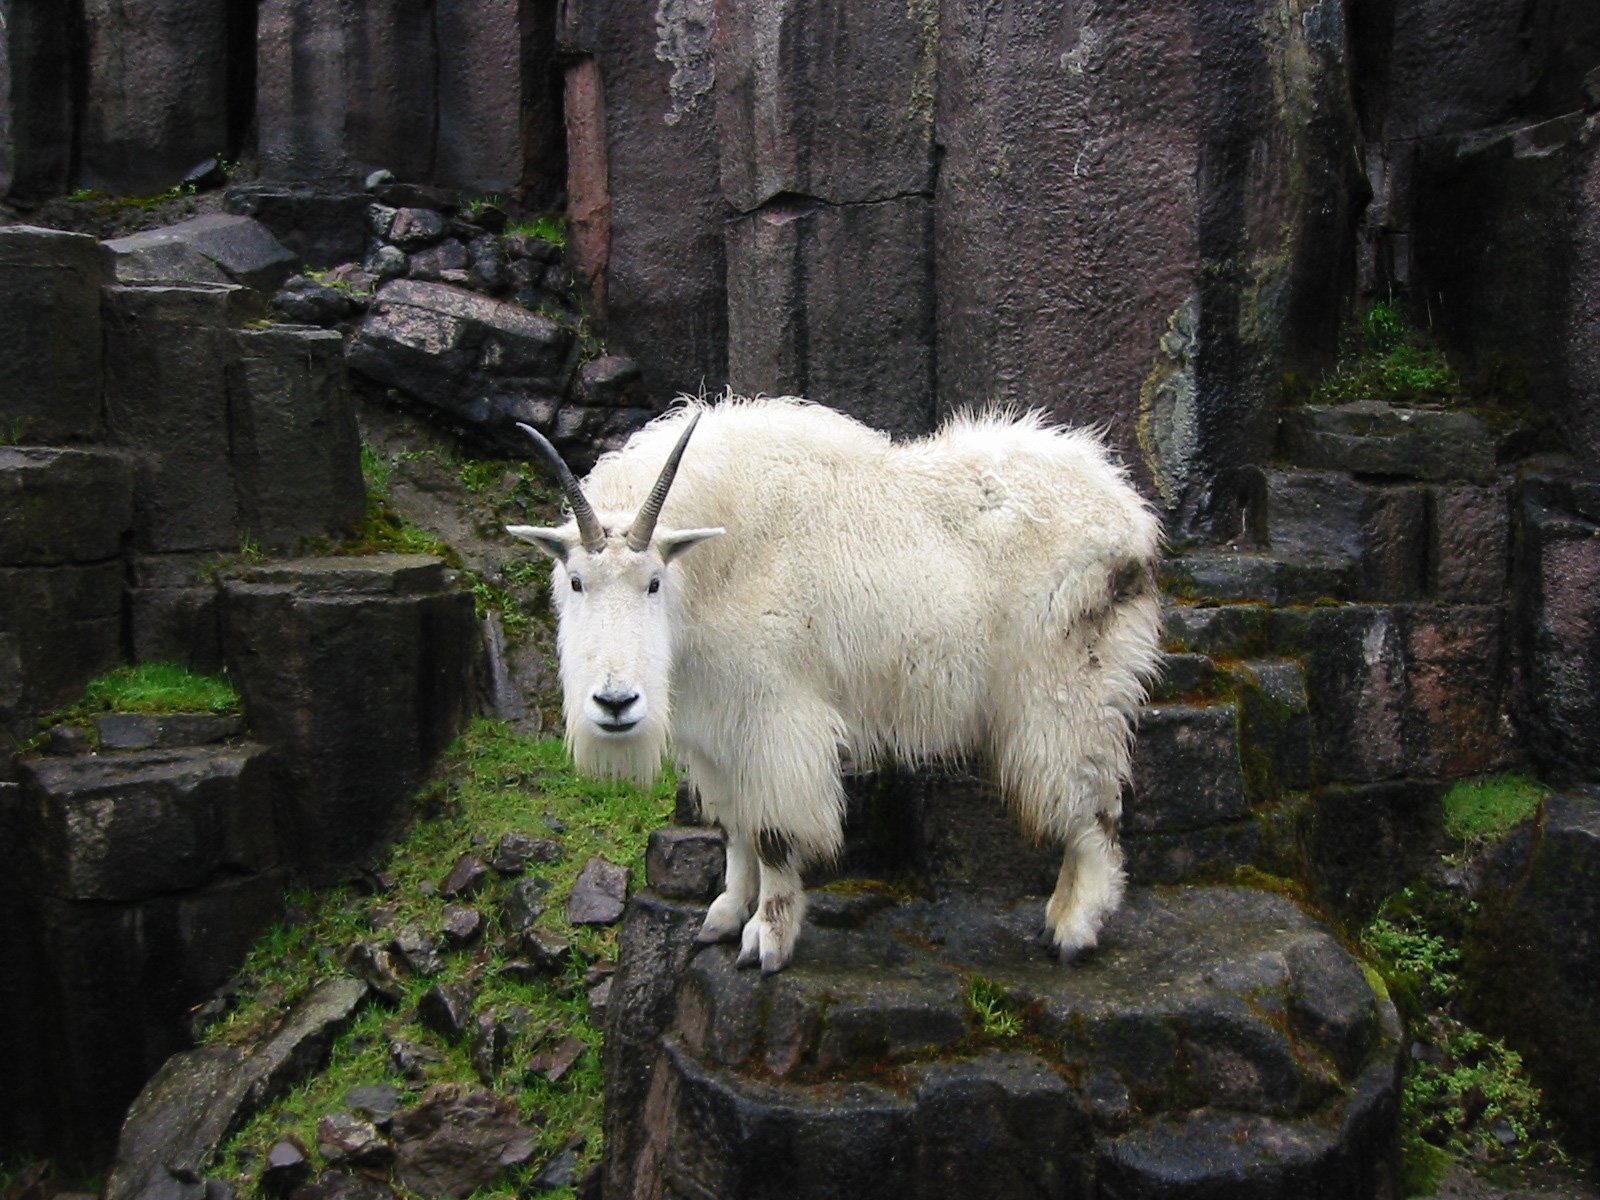 a mountain goat on the rocks near some rocks